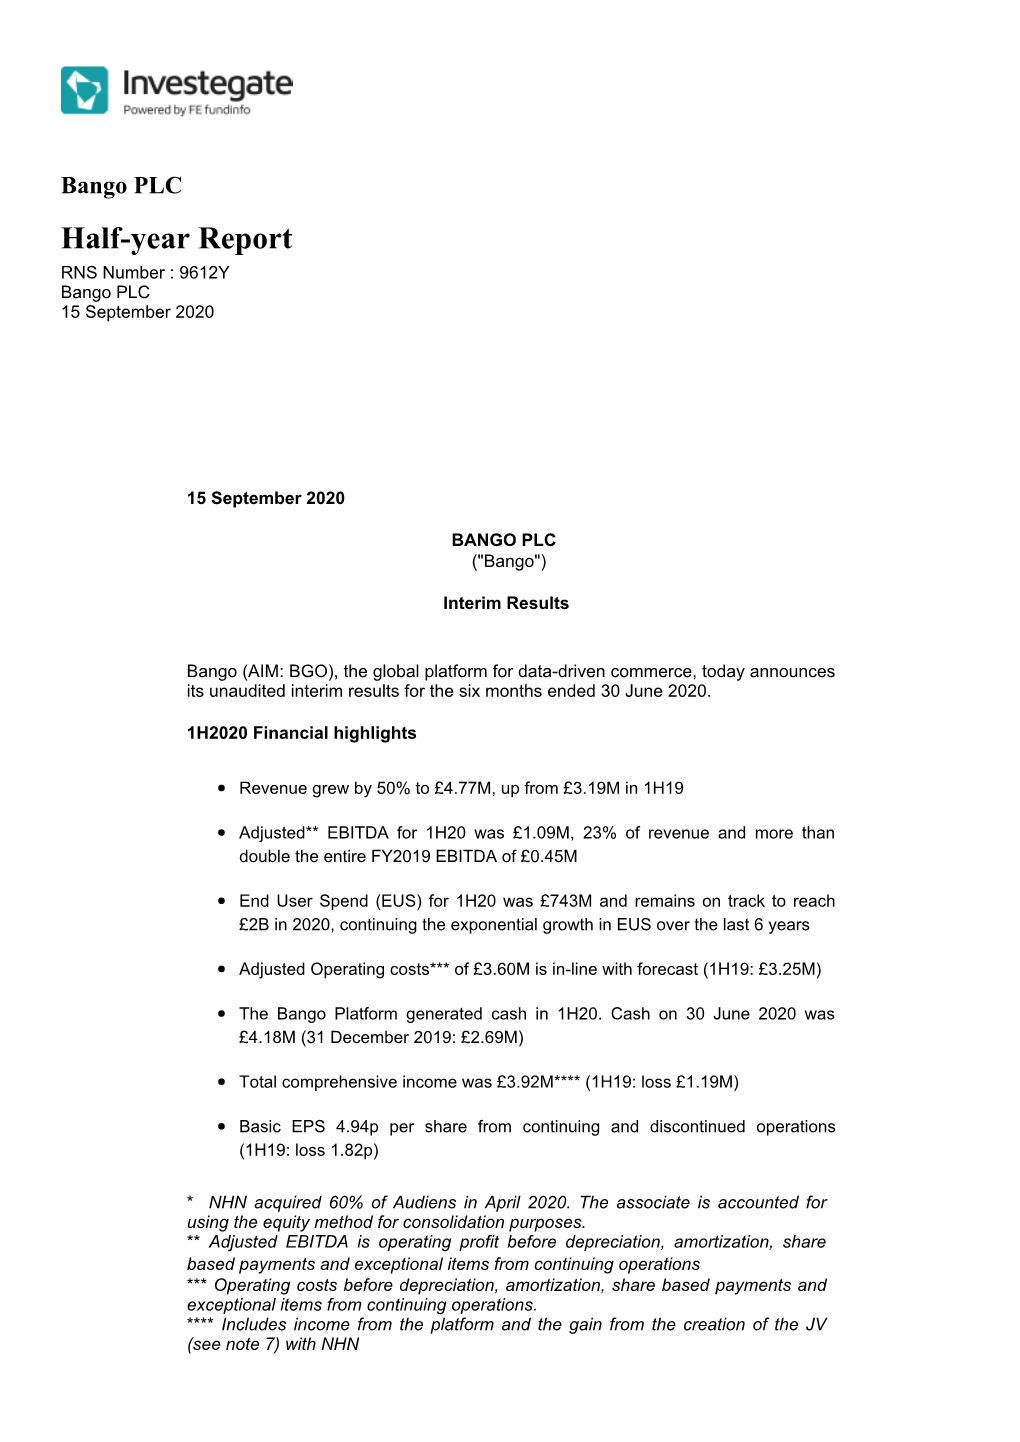 Half-Year Report